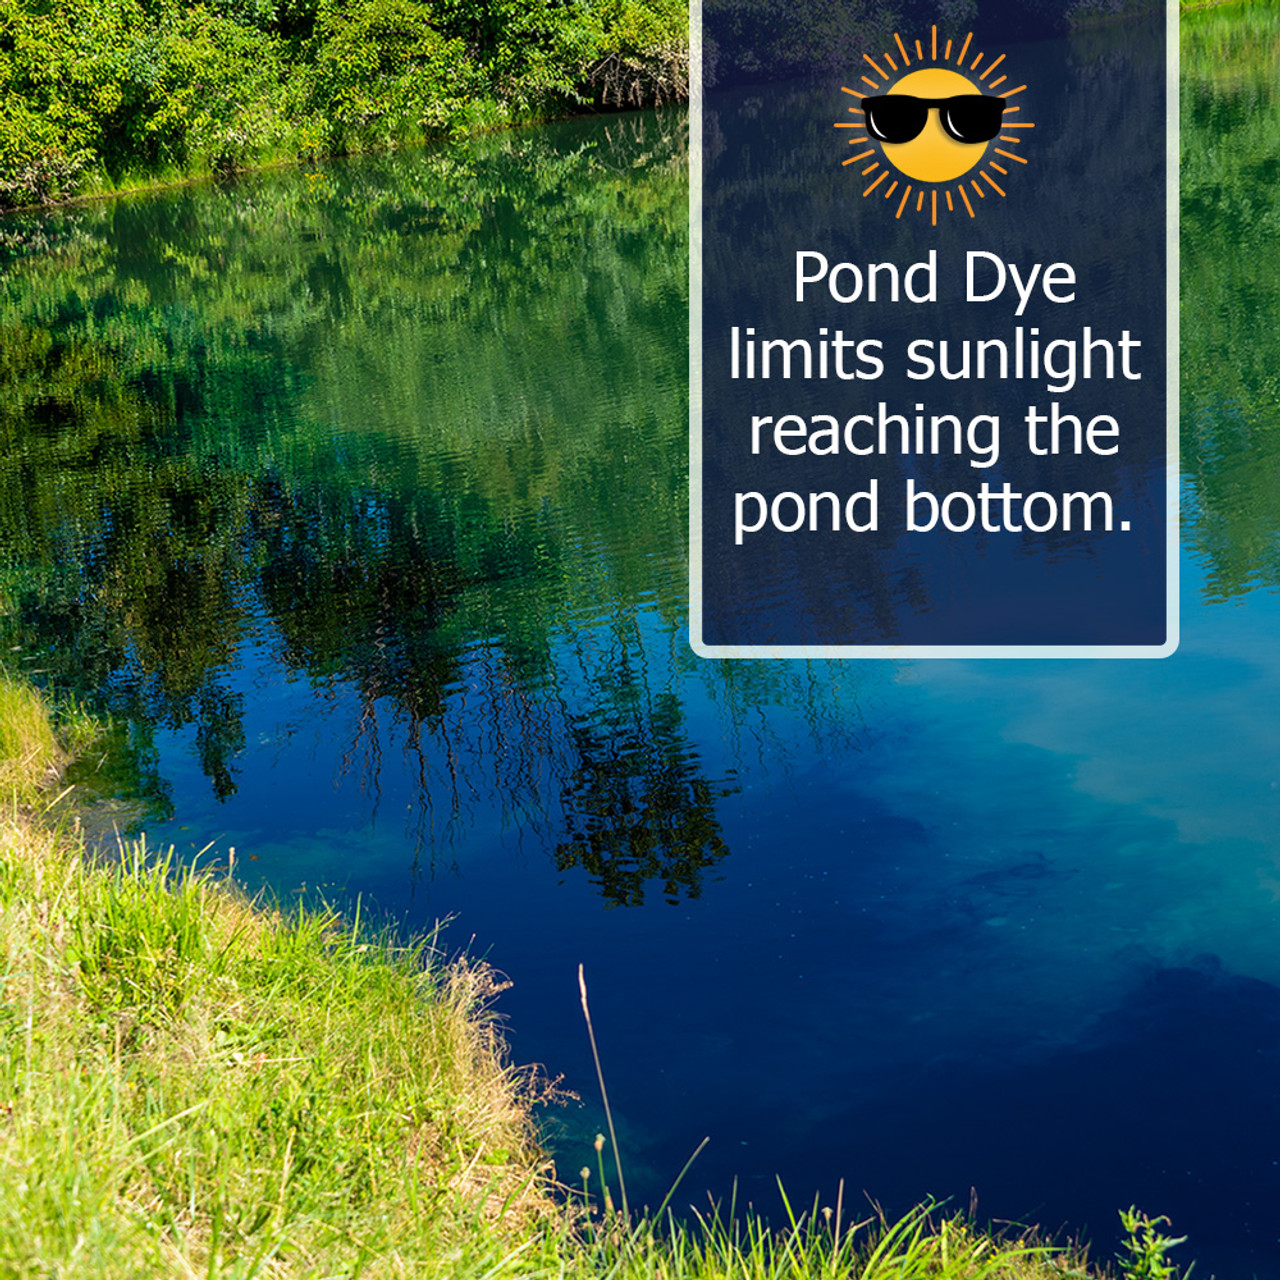 Pond dye, black pond dye, most concentrated black dye, best black pond dye